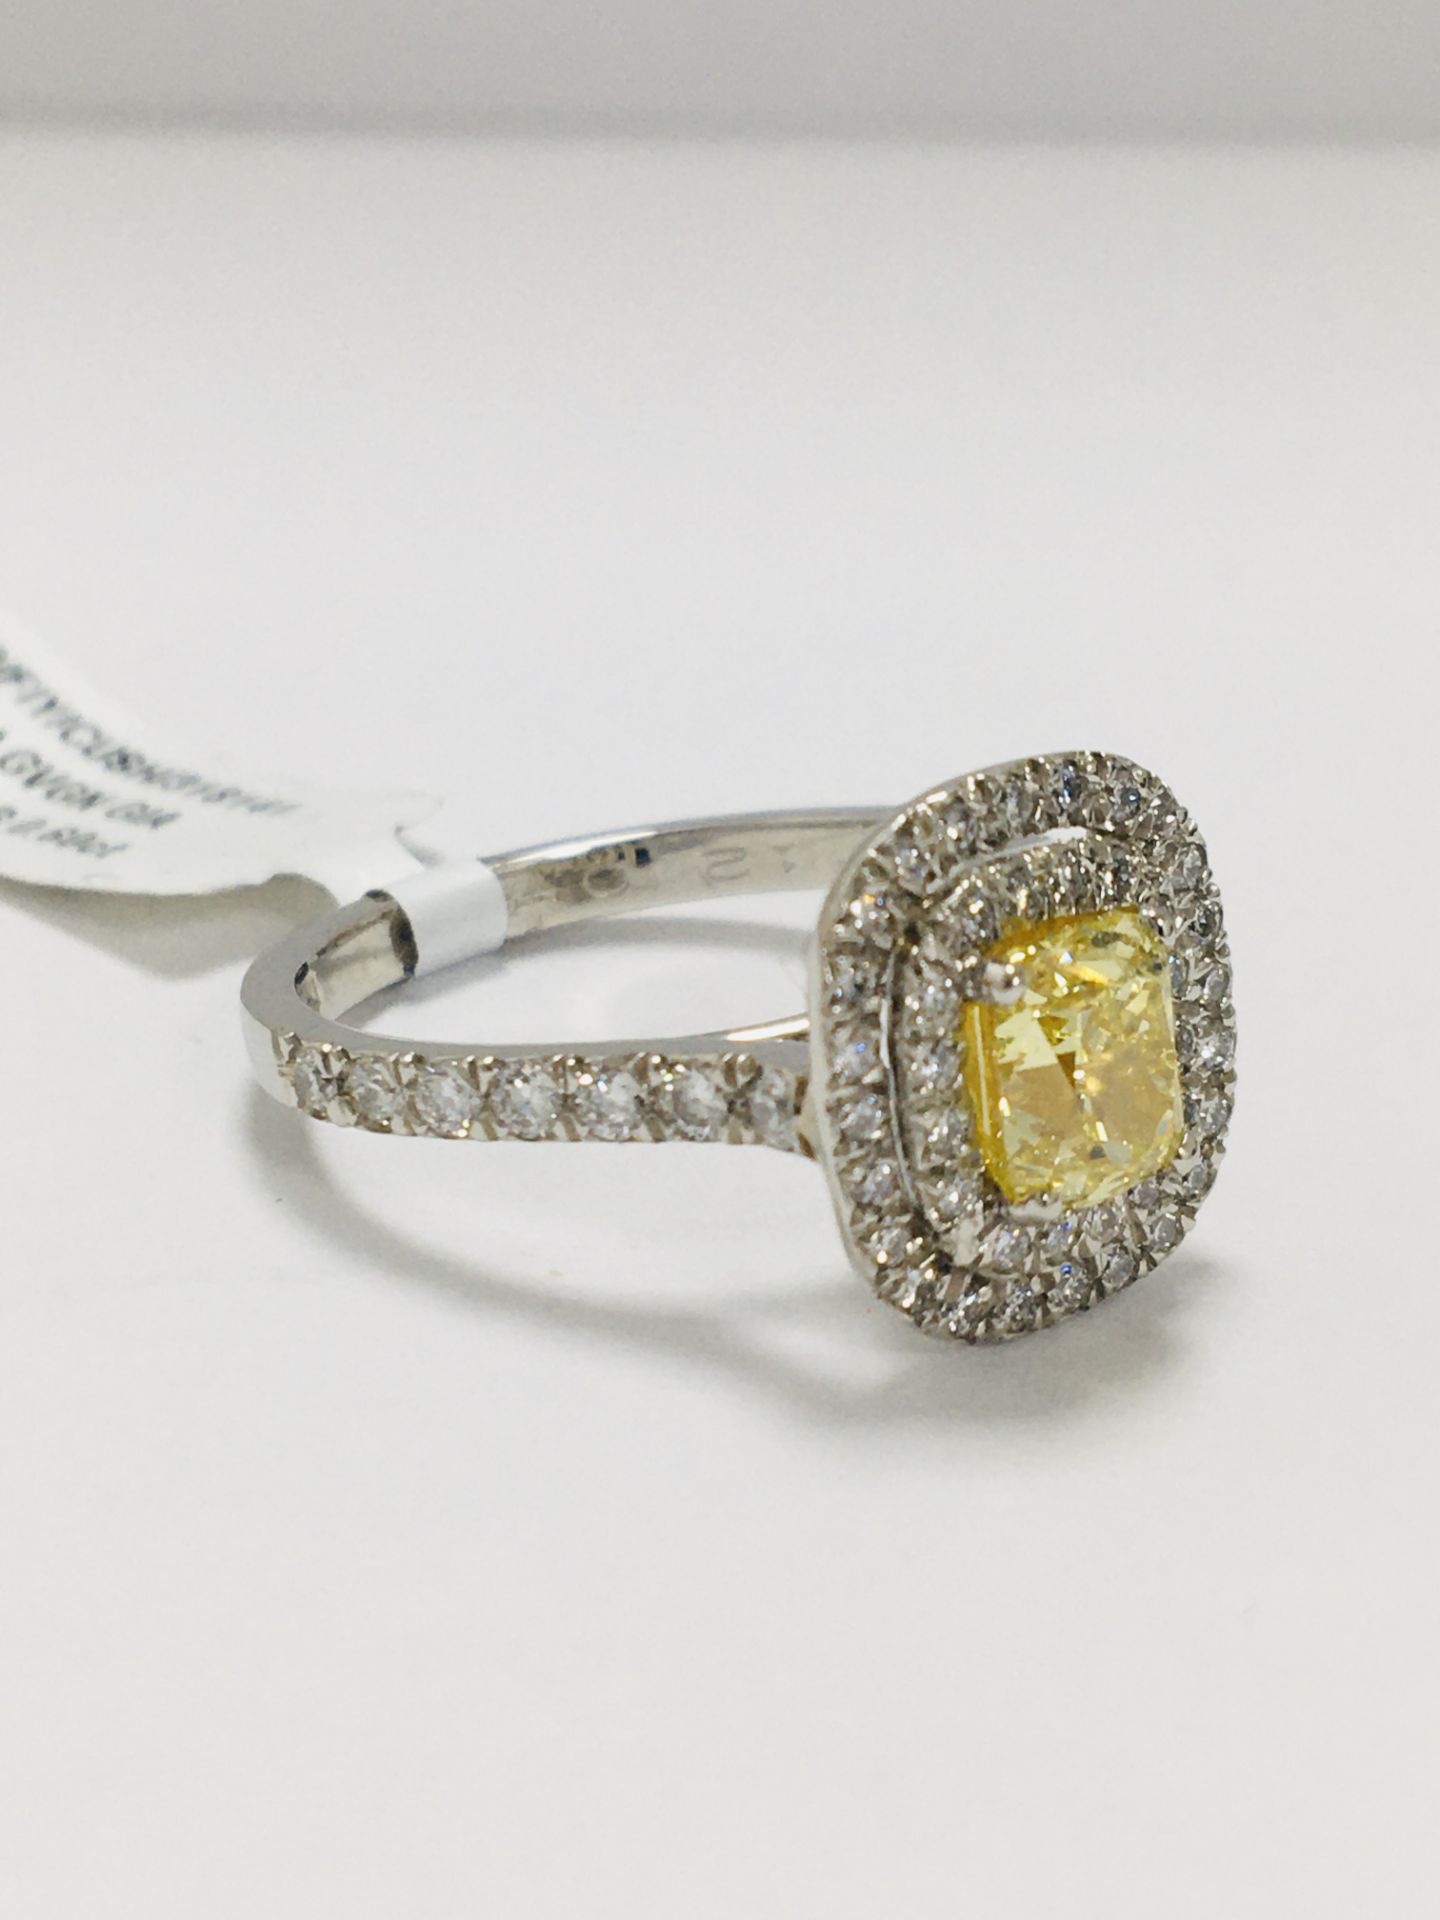 18Ct White Gold Diamond Halo Style Ring - Image 4 of 6